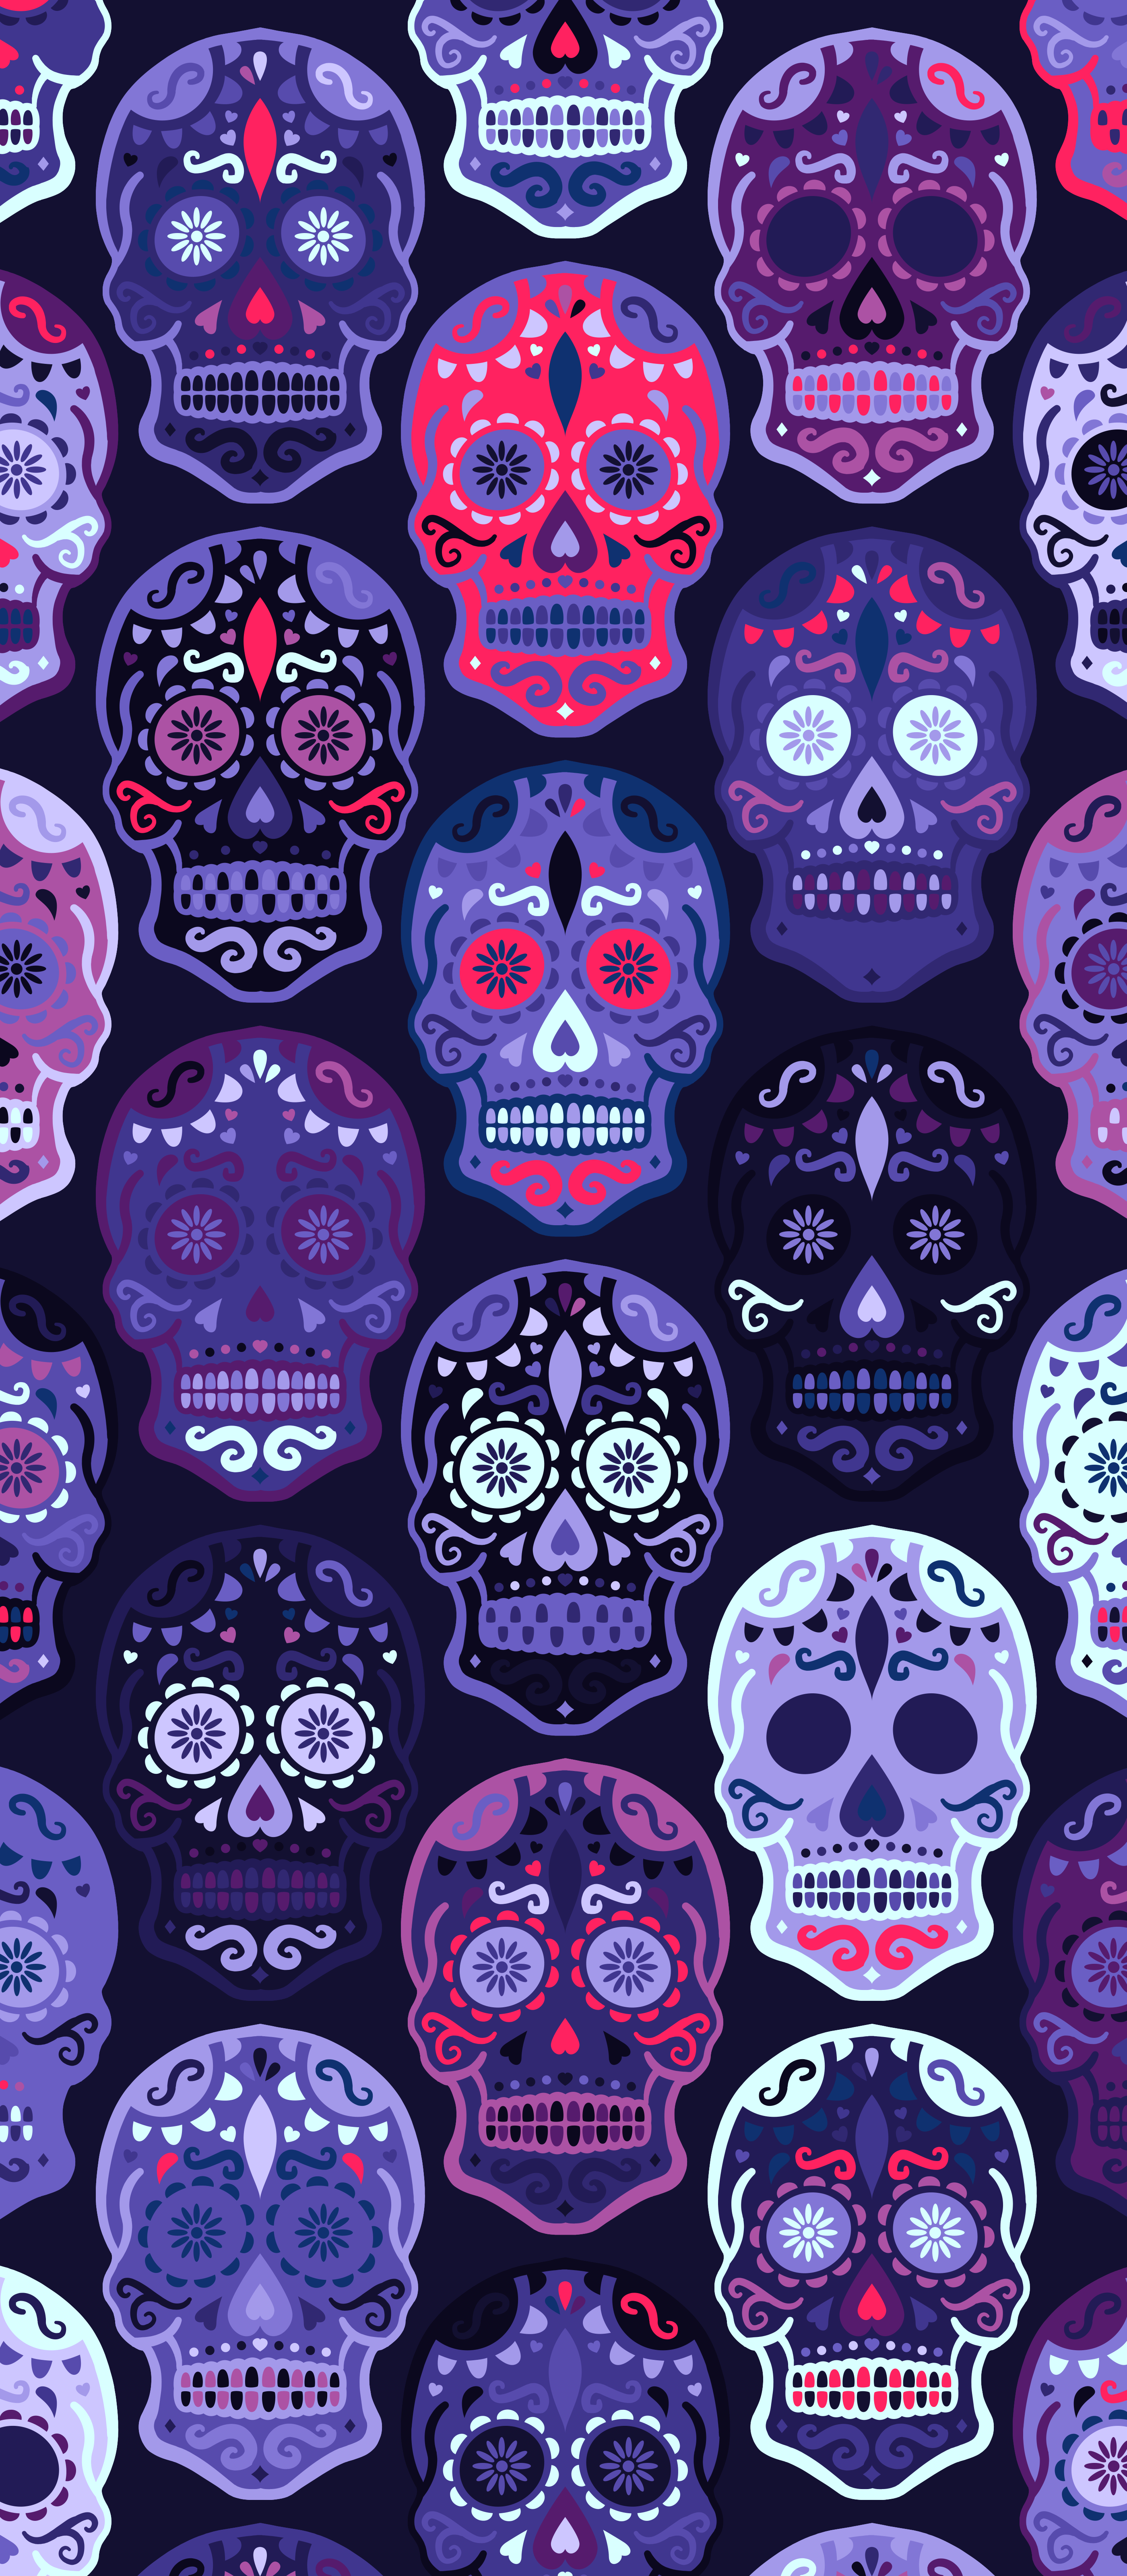 Russfussuk Dead Sweet Skull Pattern M2a Patterndesign